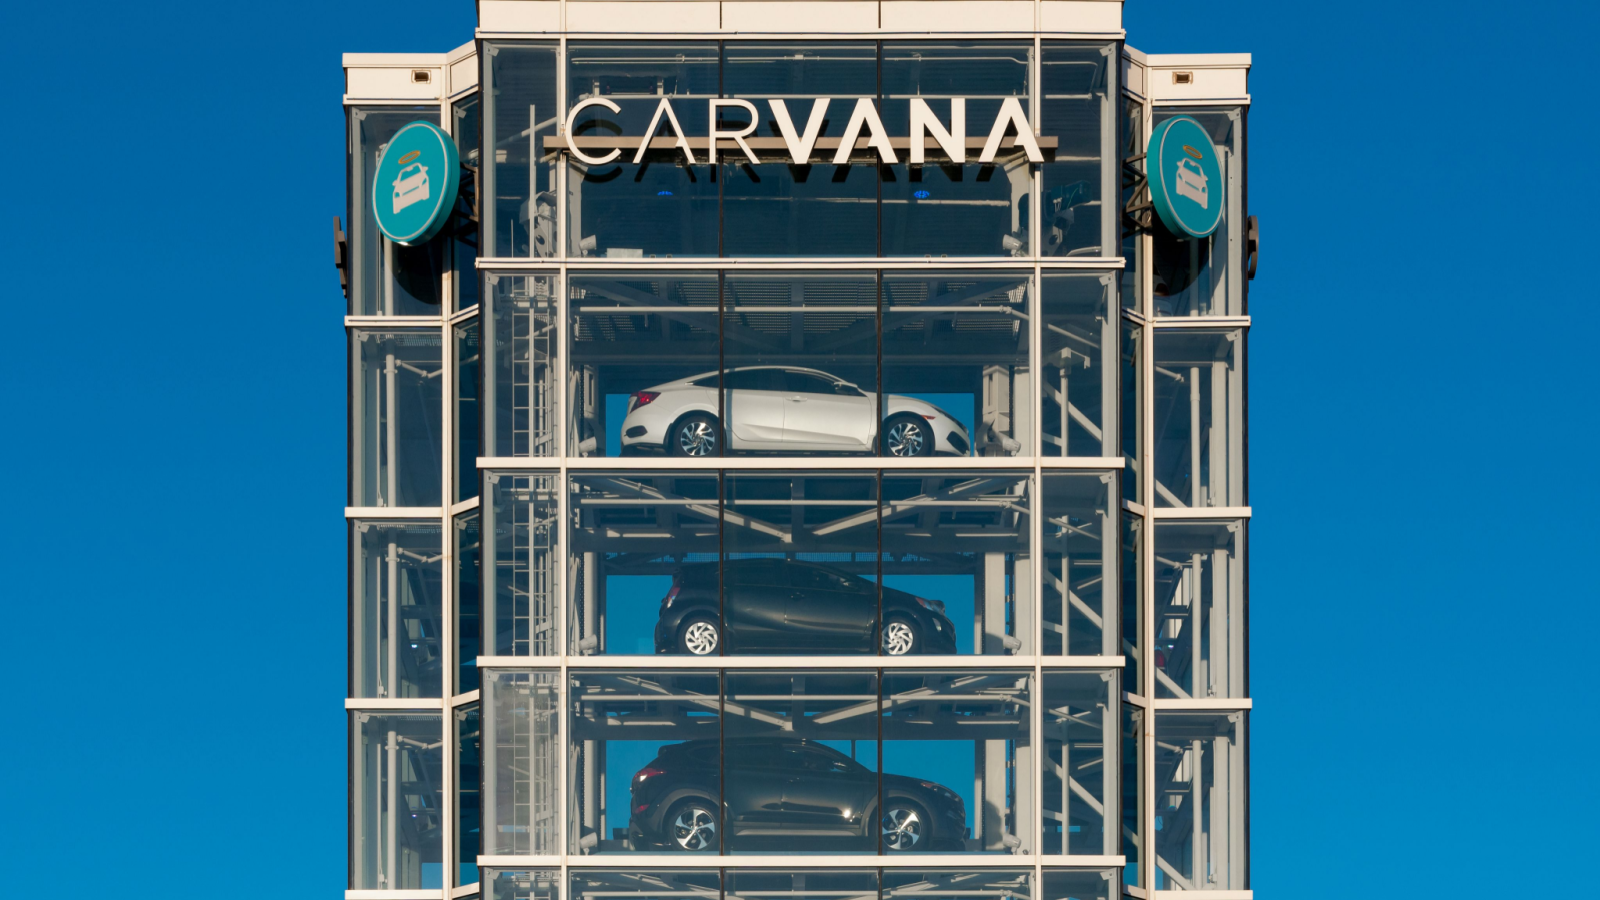 Carvana (CVNA Stock) automobile dealership vending machine. Carvana is an online-only used car dealer.